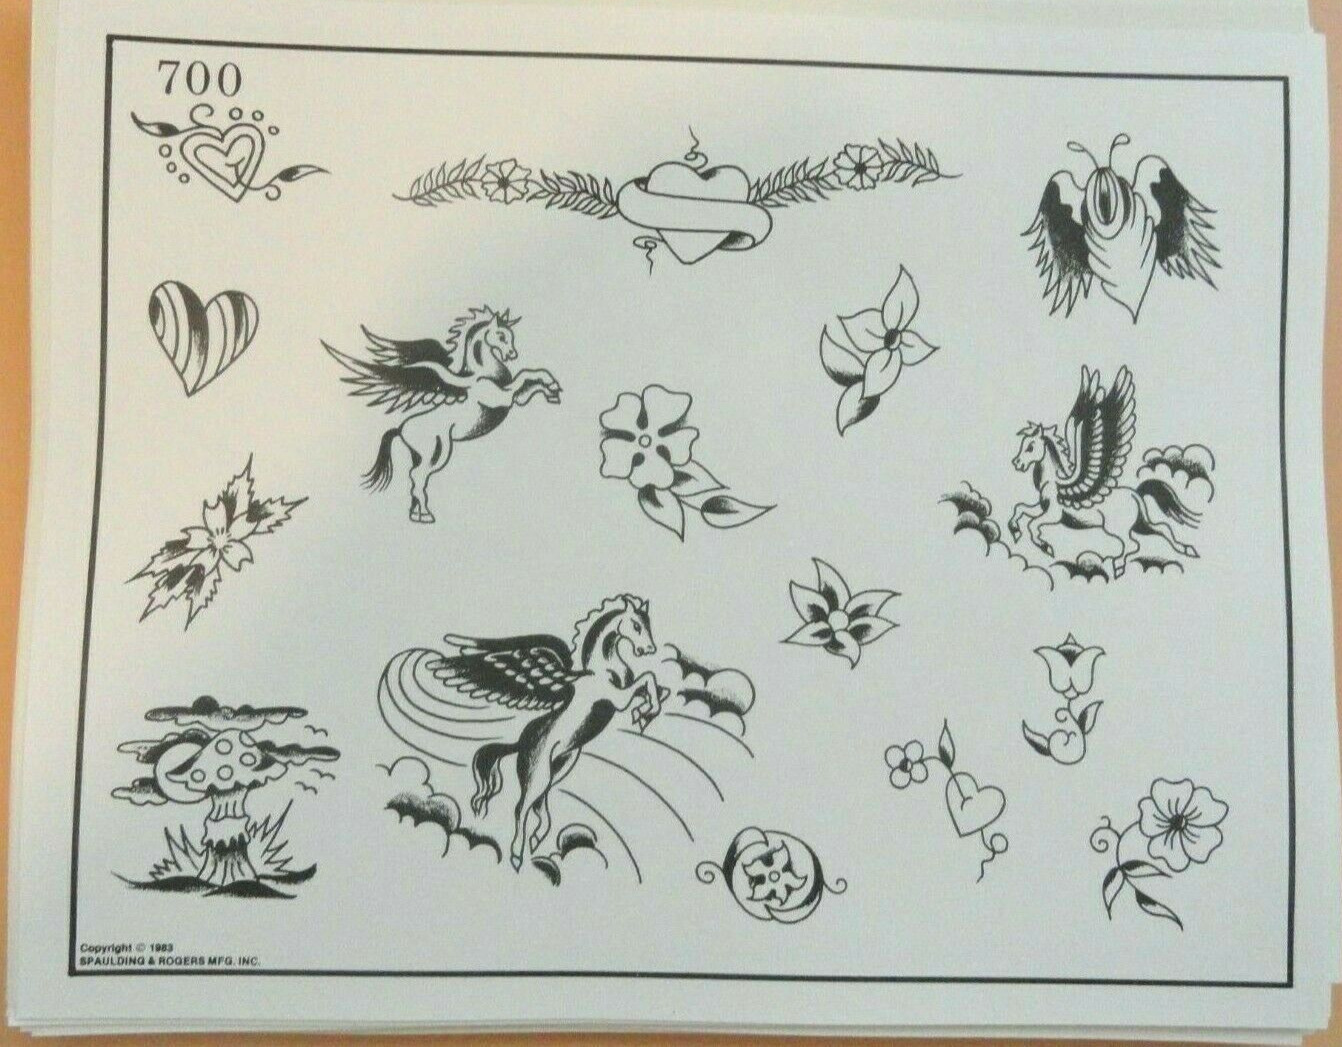 Vintage 1983 Spaulding & Rogers Tattoo Flash Sheet #700 Pegasus Flowers Heart